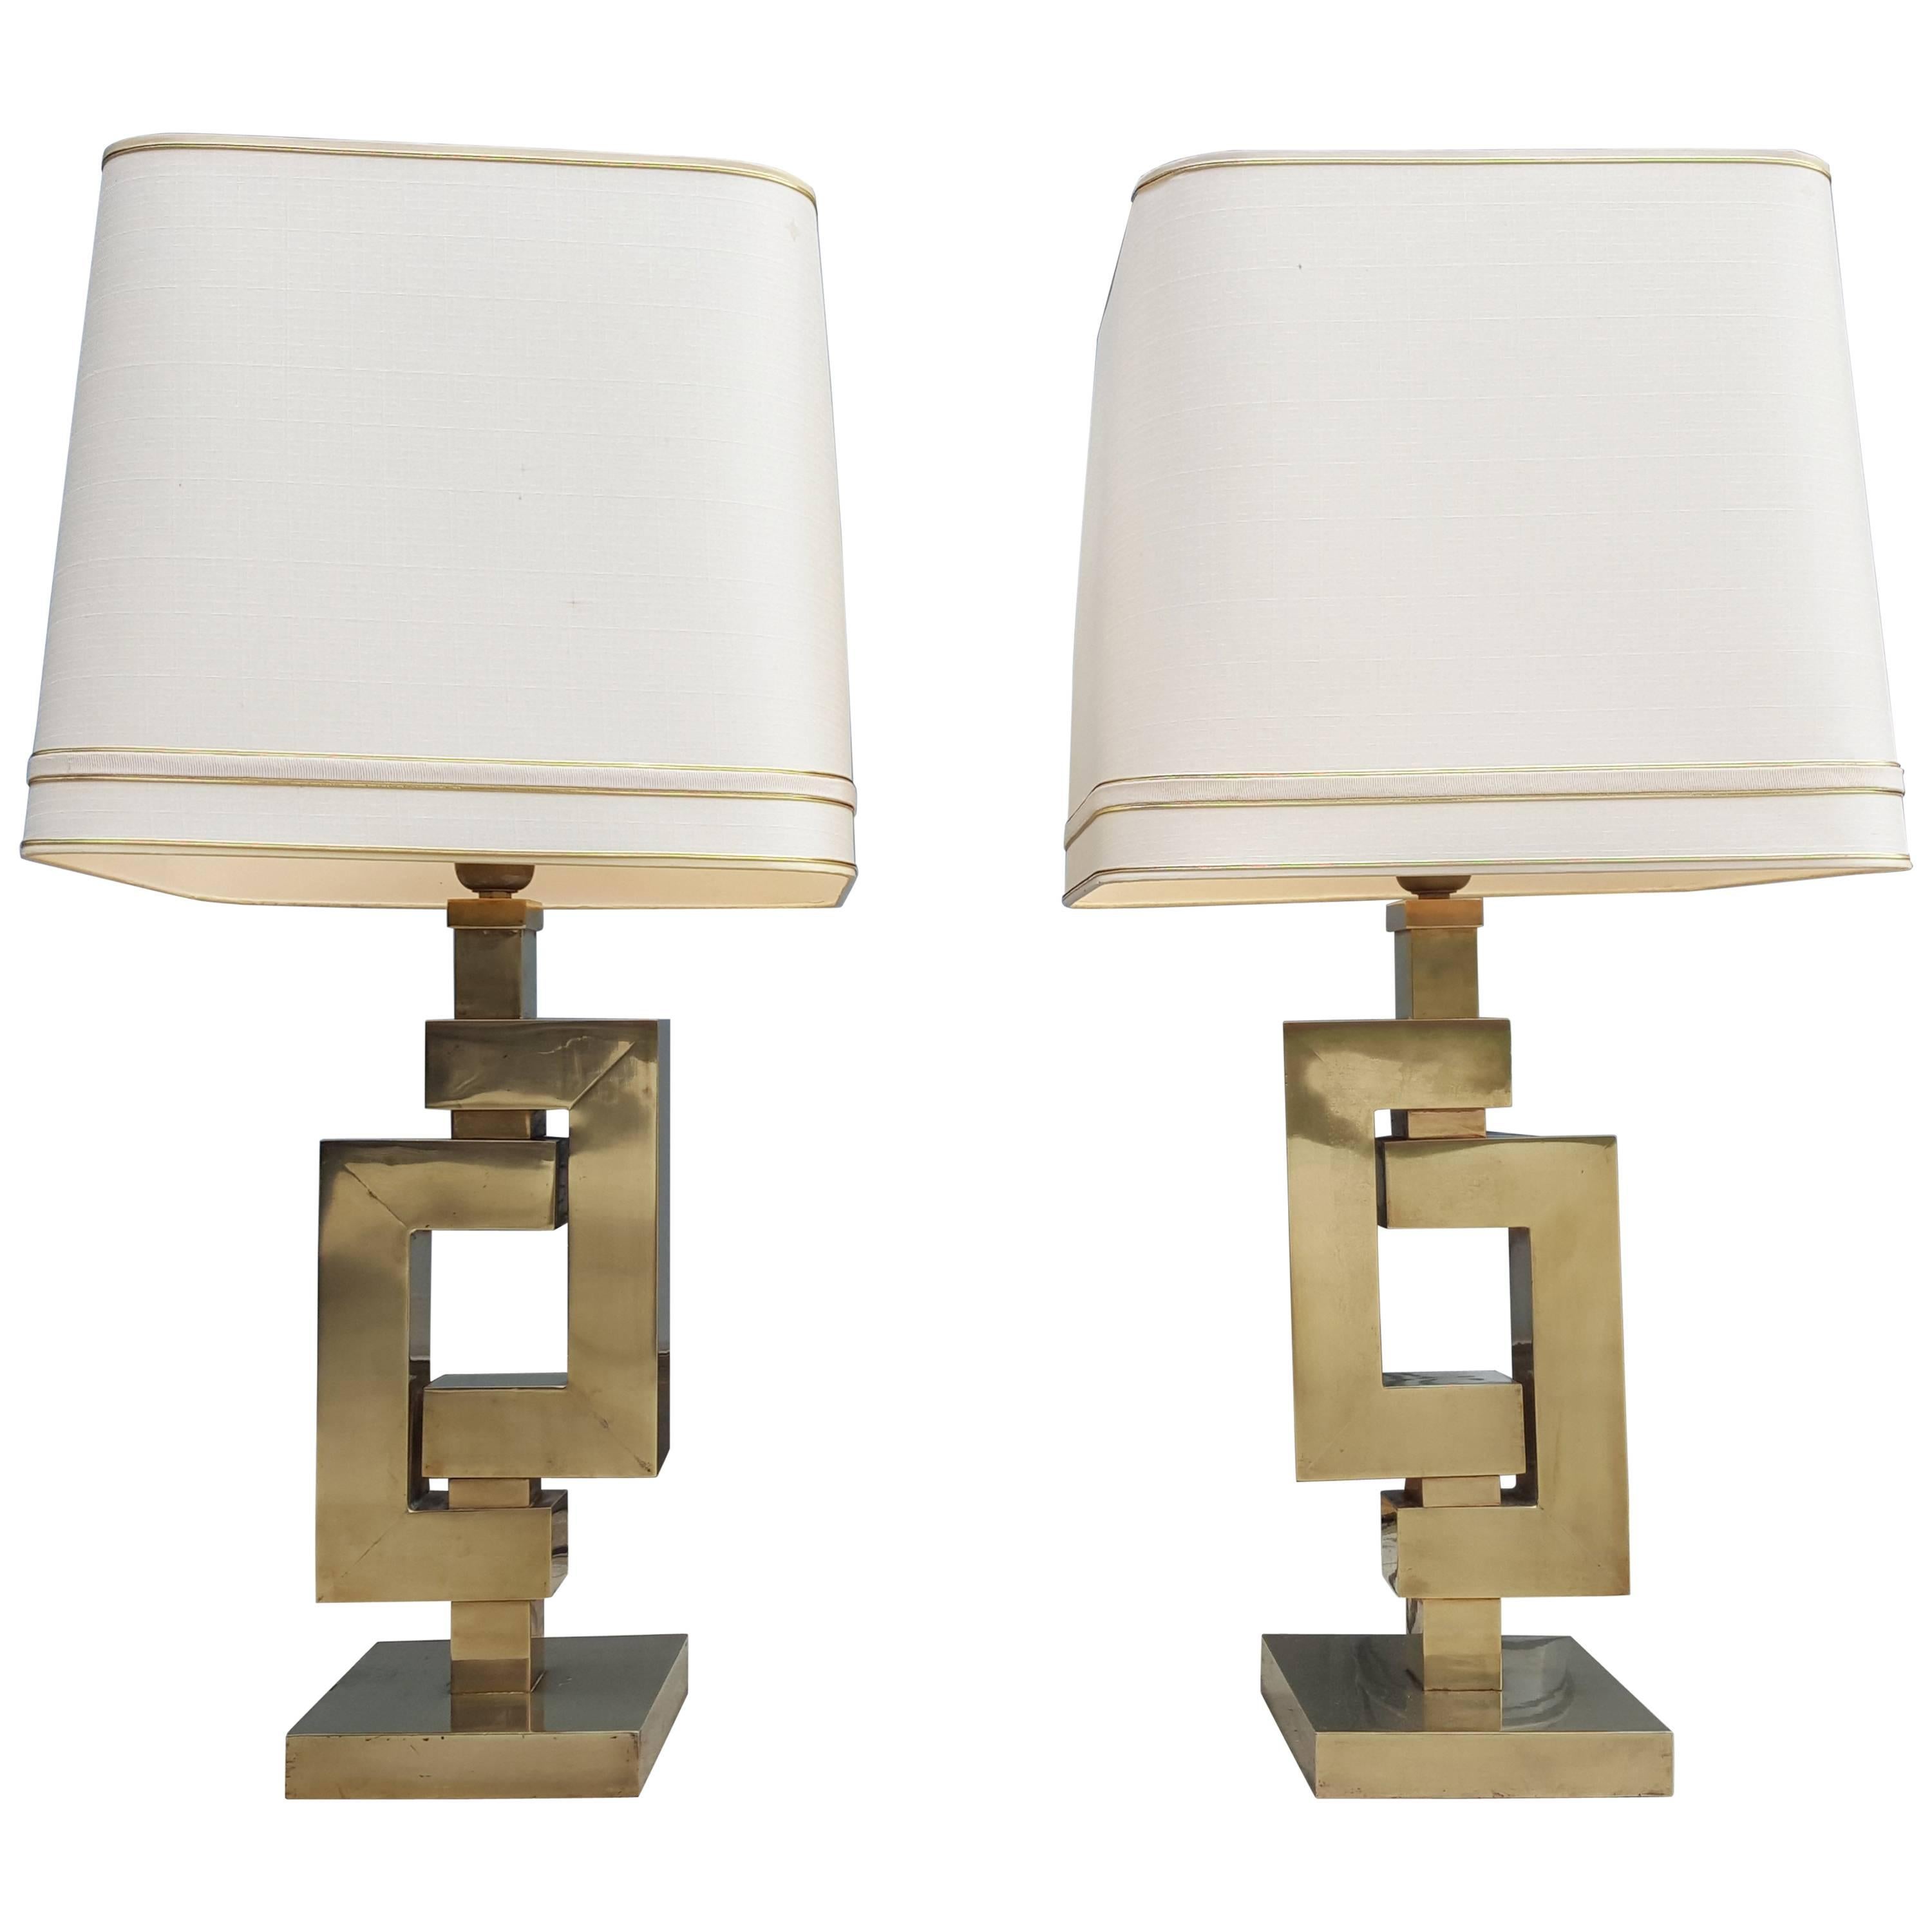 Impressive Pair of Romeo Rega Table Lamps Mid-Century Modern Decorative